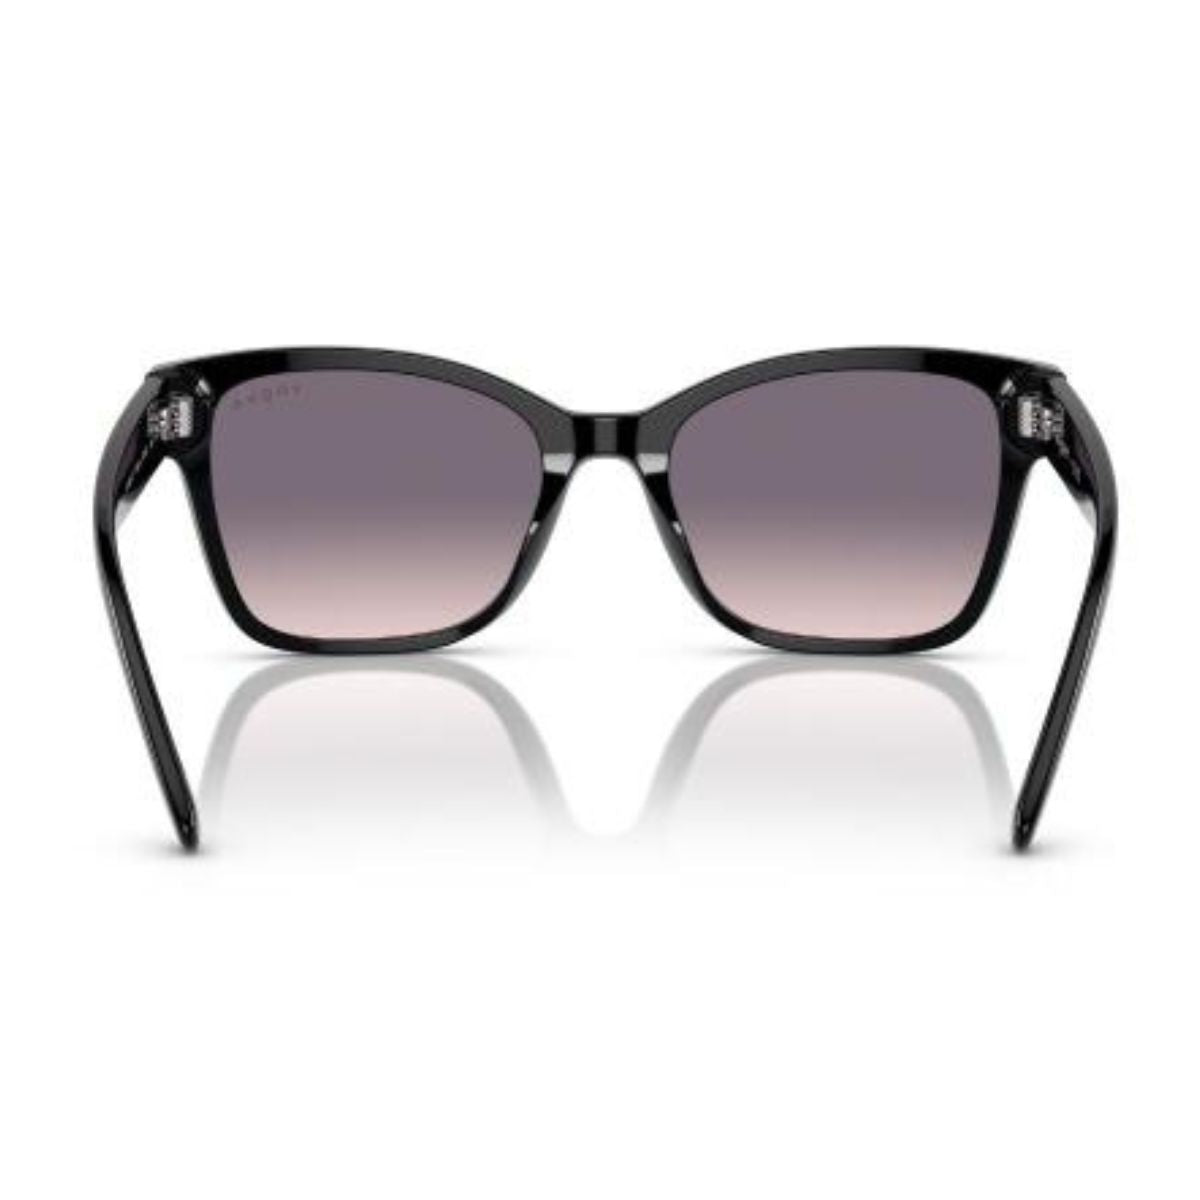 "Vogue 5534 W44 Balck Cat Eye Sunglasses For Womens At Optorium"